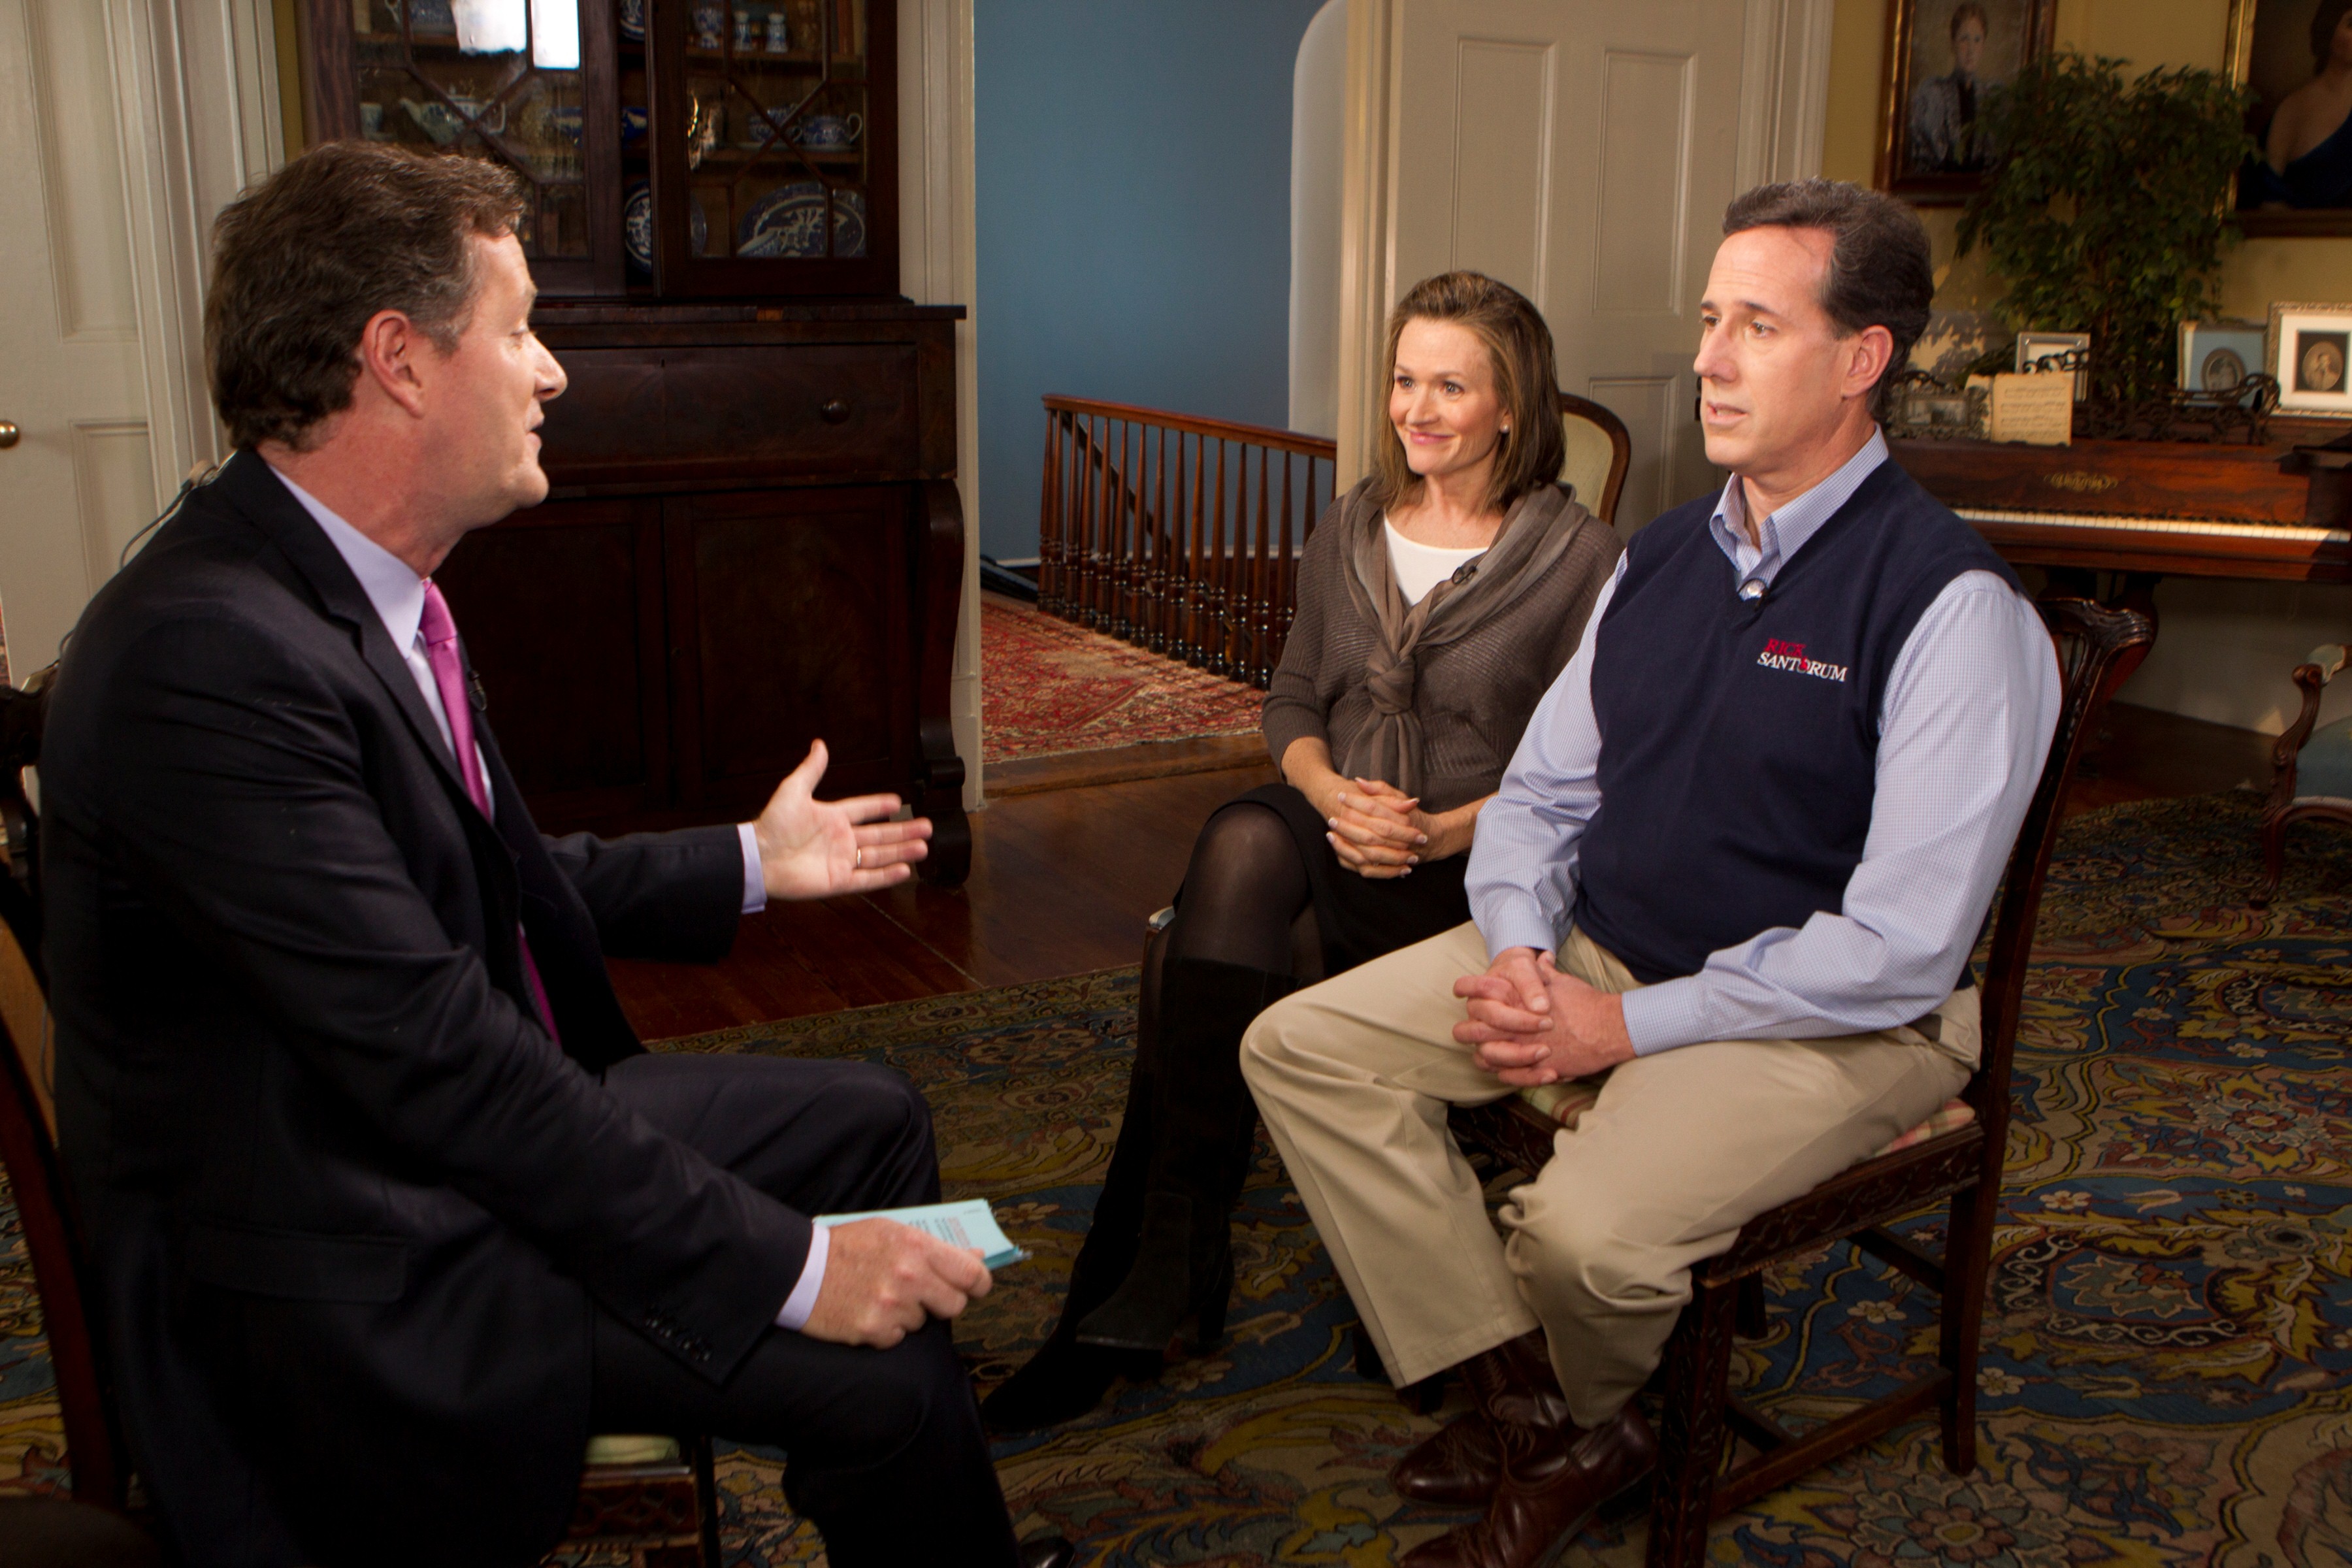 Rick and Karen Santorum join Piers Morgan live for an exclusive sit down interview